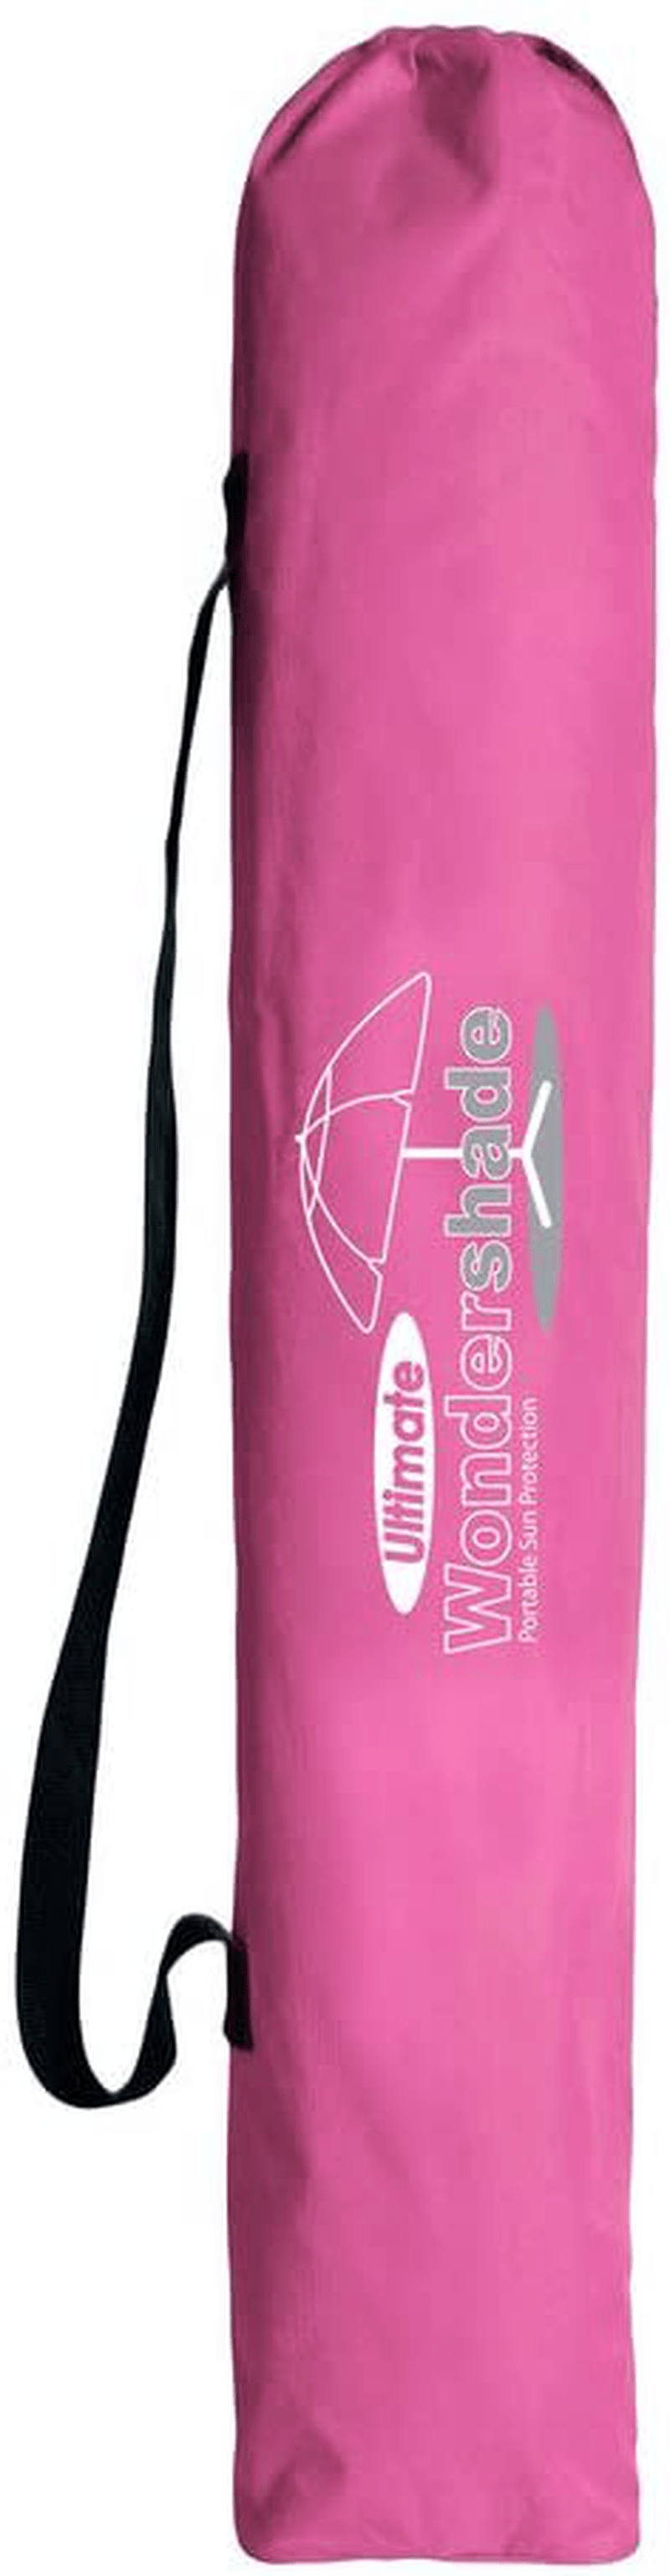 Wondershade Ultimate Portable Sun Shade Umbrella, Lightweight Adjustable Instant Sun Protection - Pink Home & Garden > Lawn & Garden > Outdoor Living > Outdoor Umbrella & Sunshade Accessories Wondershade   